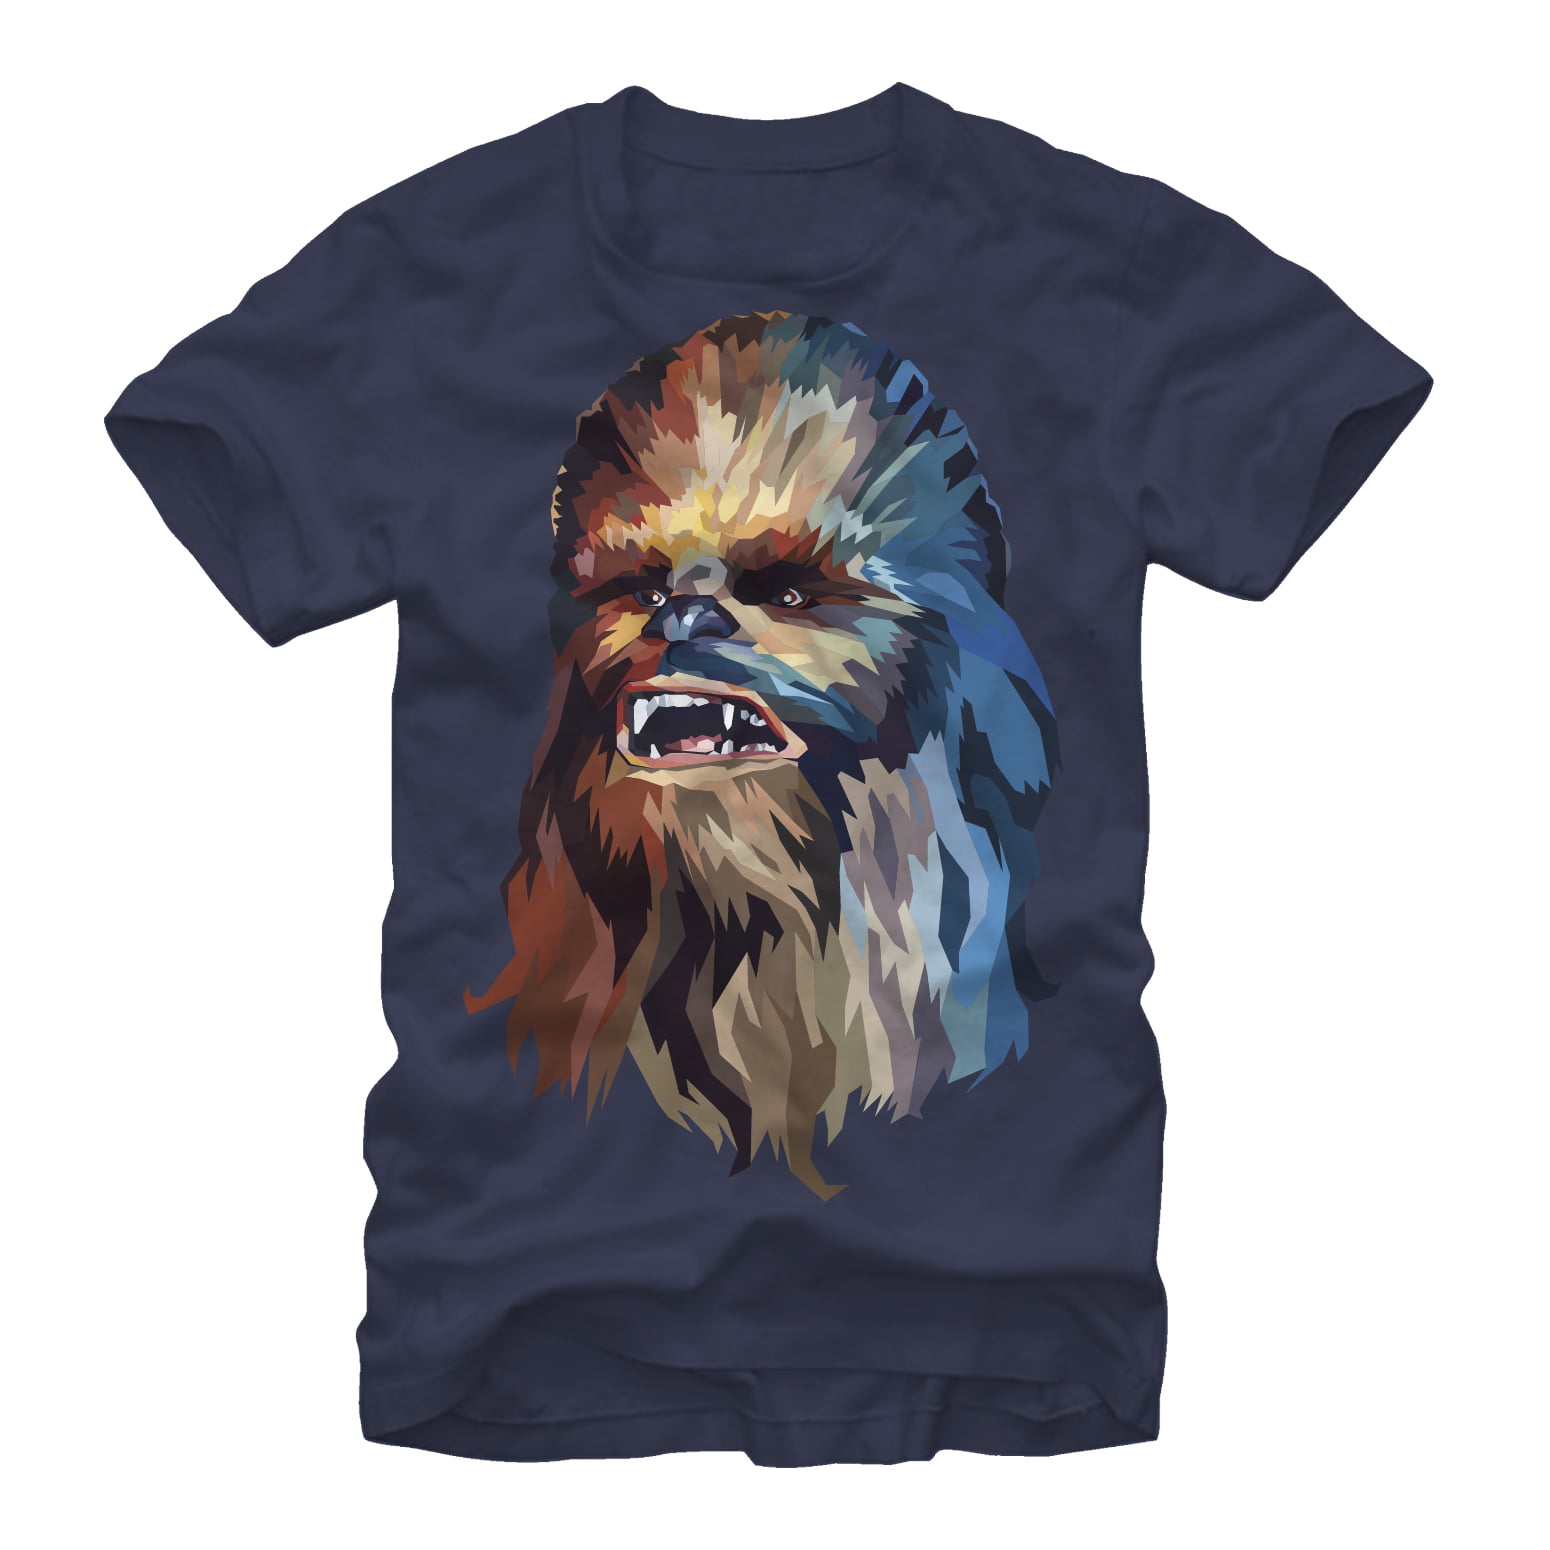 star wars chewbacca t shirt